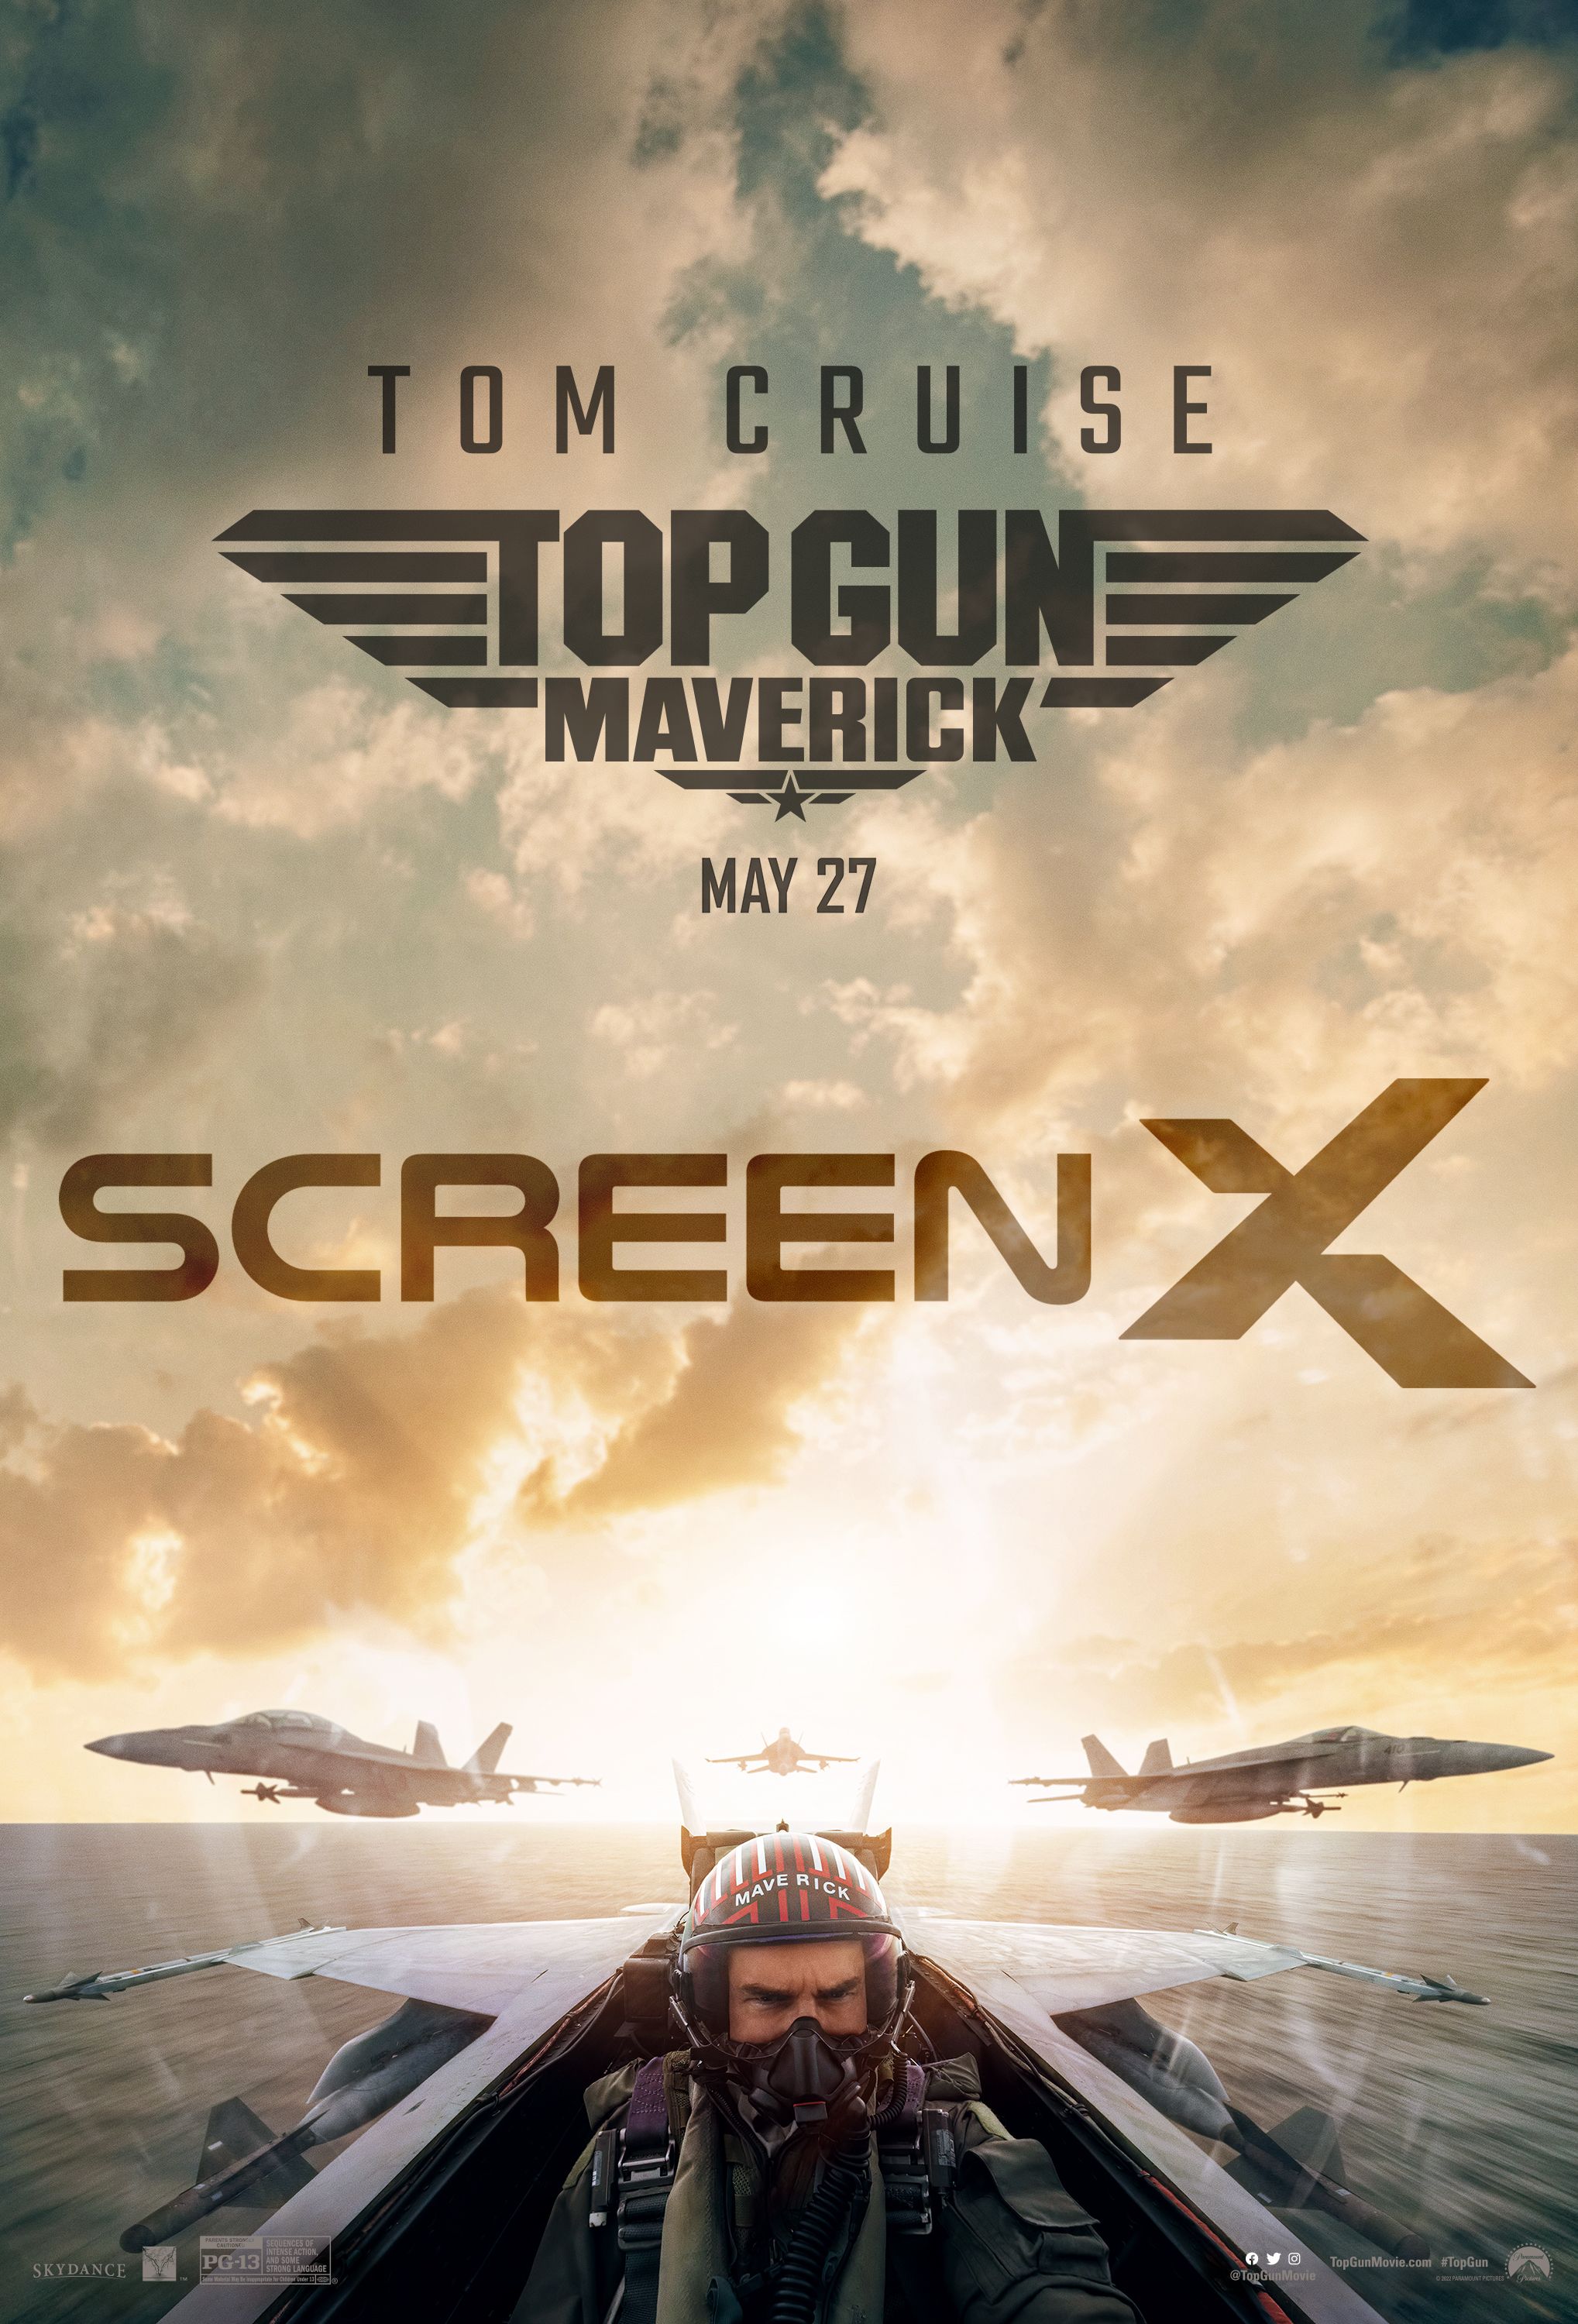 Top Gun Maverick ScreenX Poster